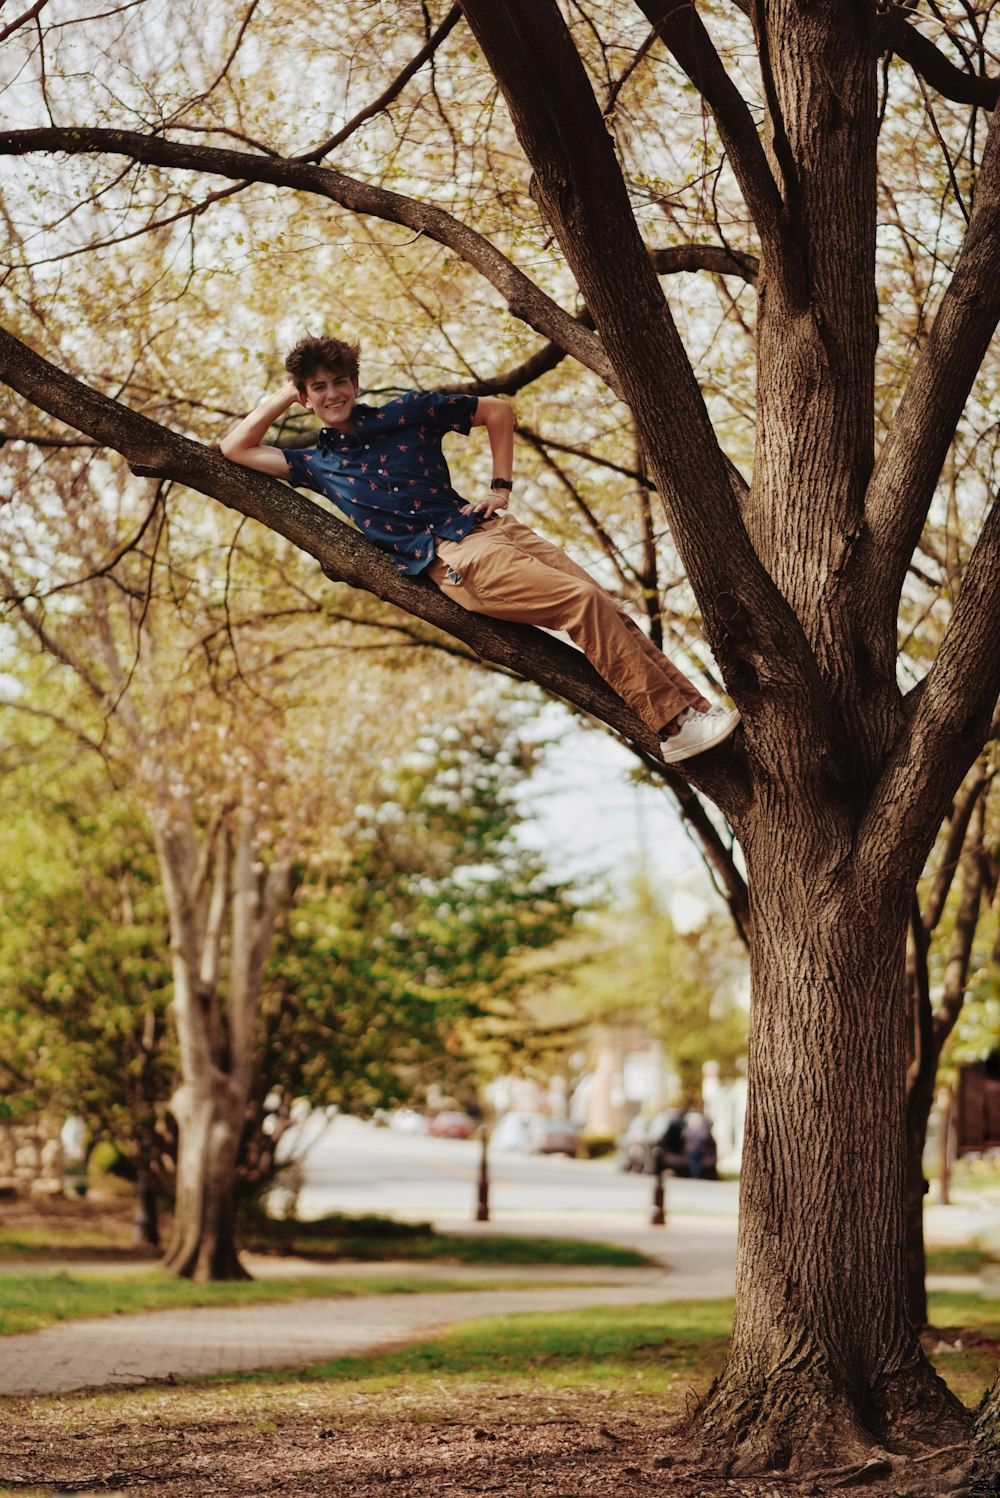 Un garçon dans un arbre